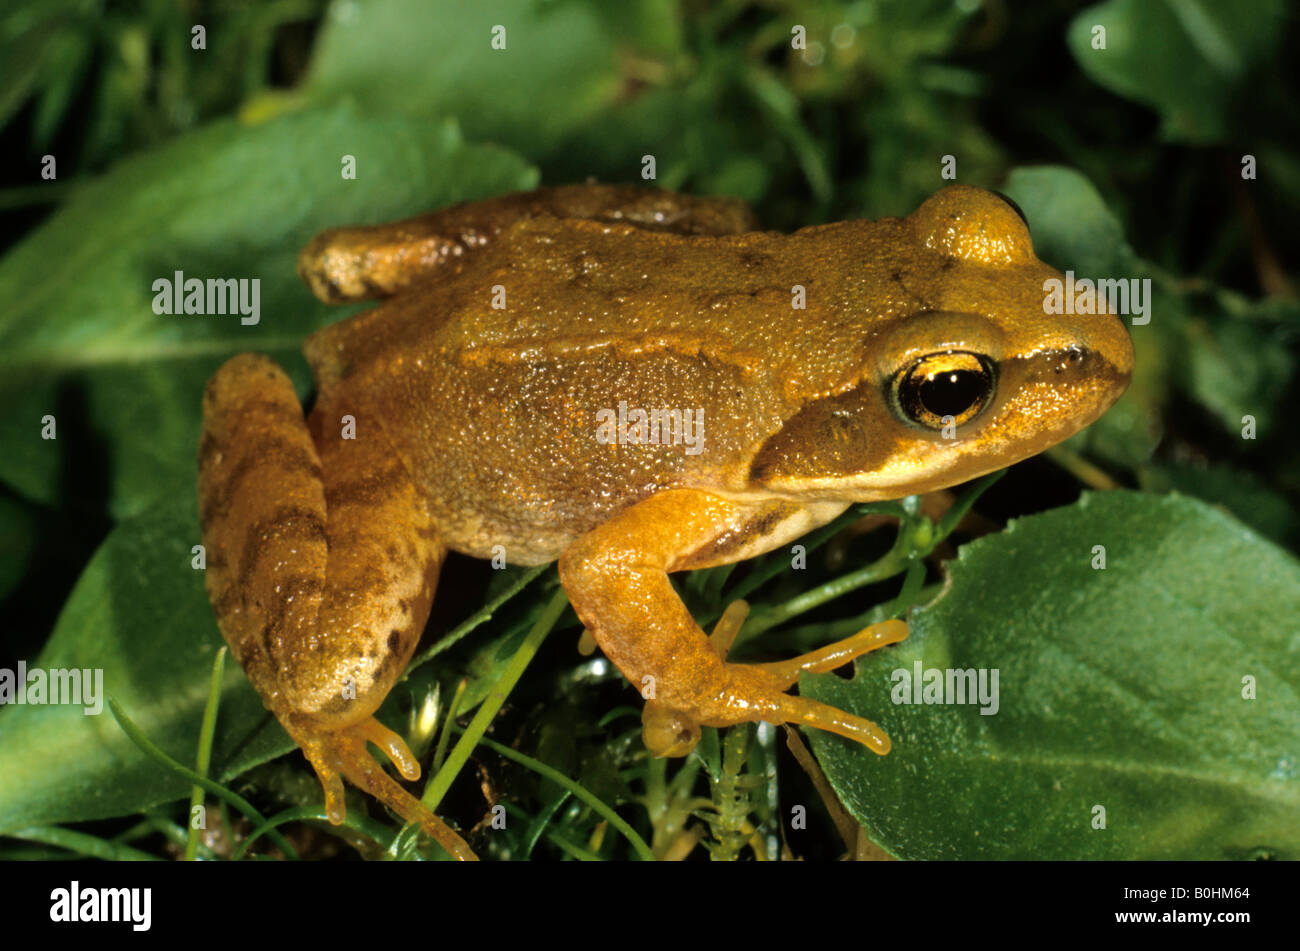 Two-year-old European Common Frog (Rana temporaria) Stock Photo